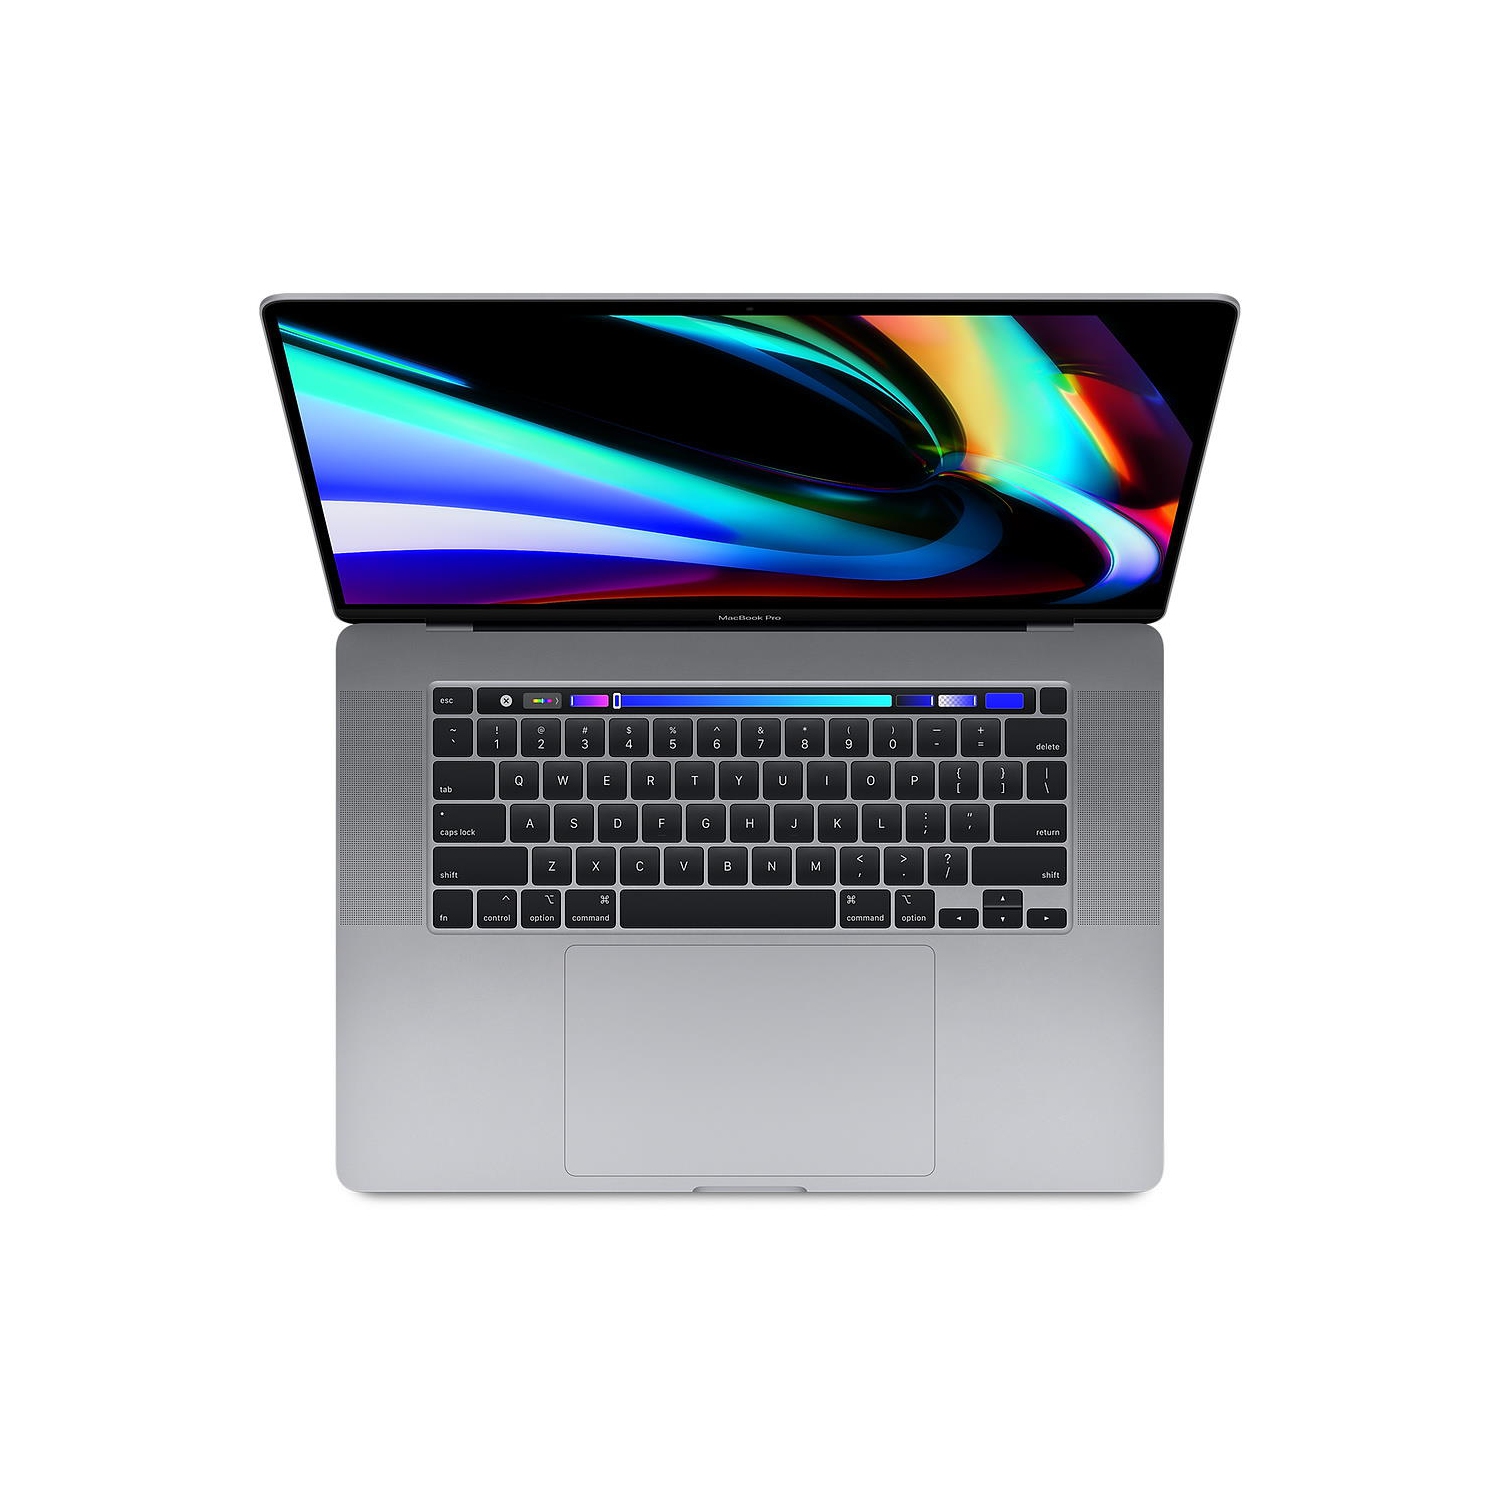 Refurbished - Excellent) Macbook Pro 16 (DG, Space Gray, TB) 2.3 